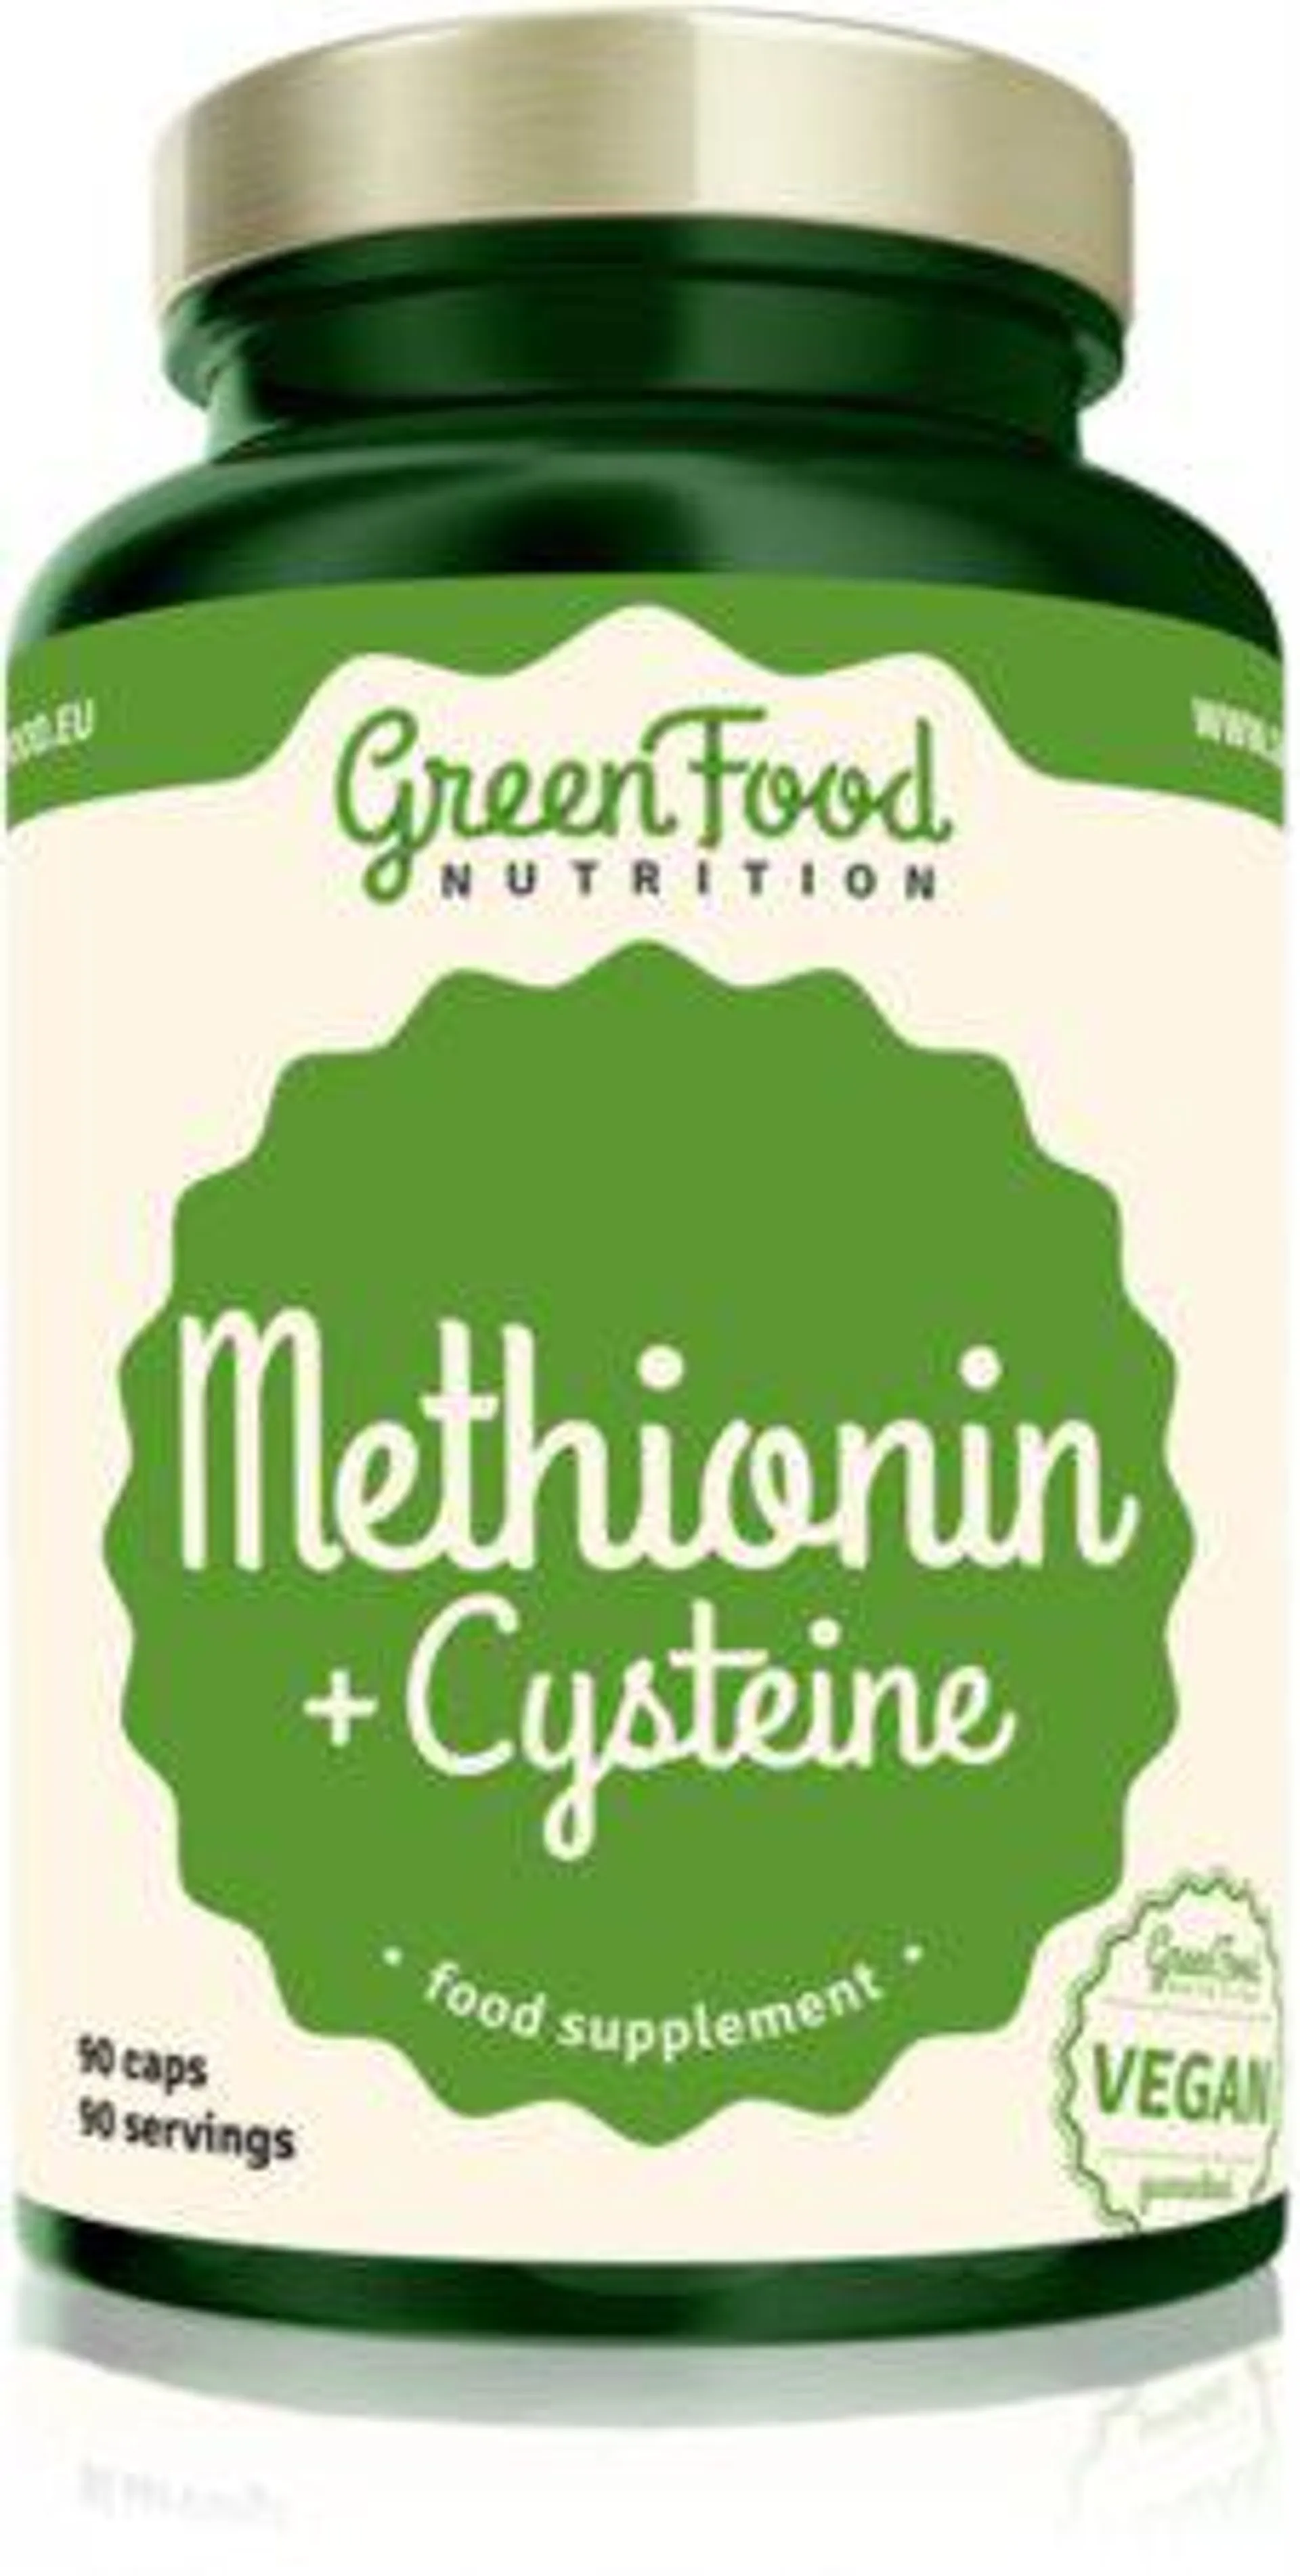 Methionin + Cysteine